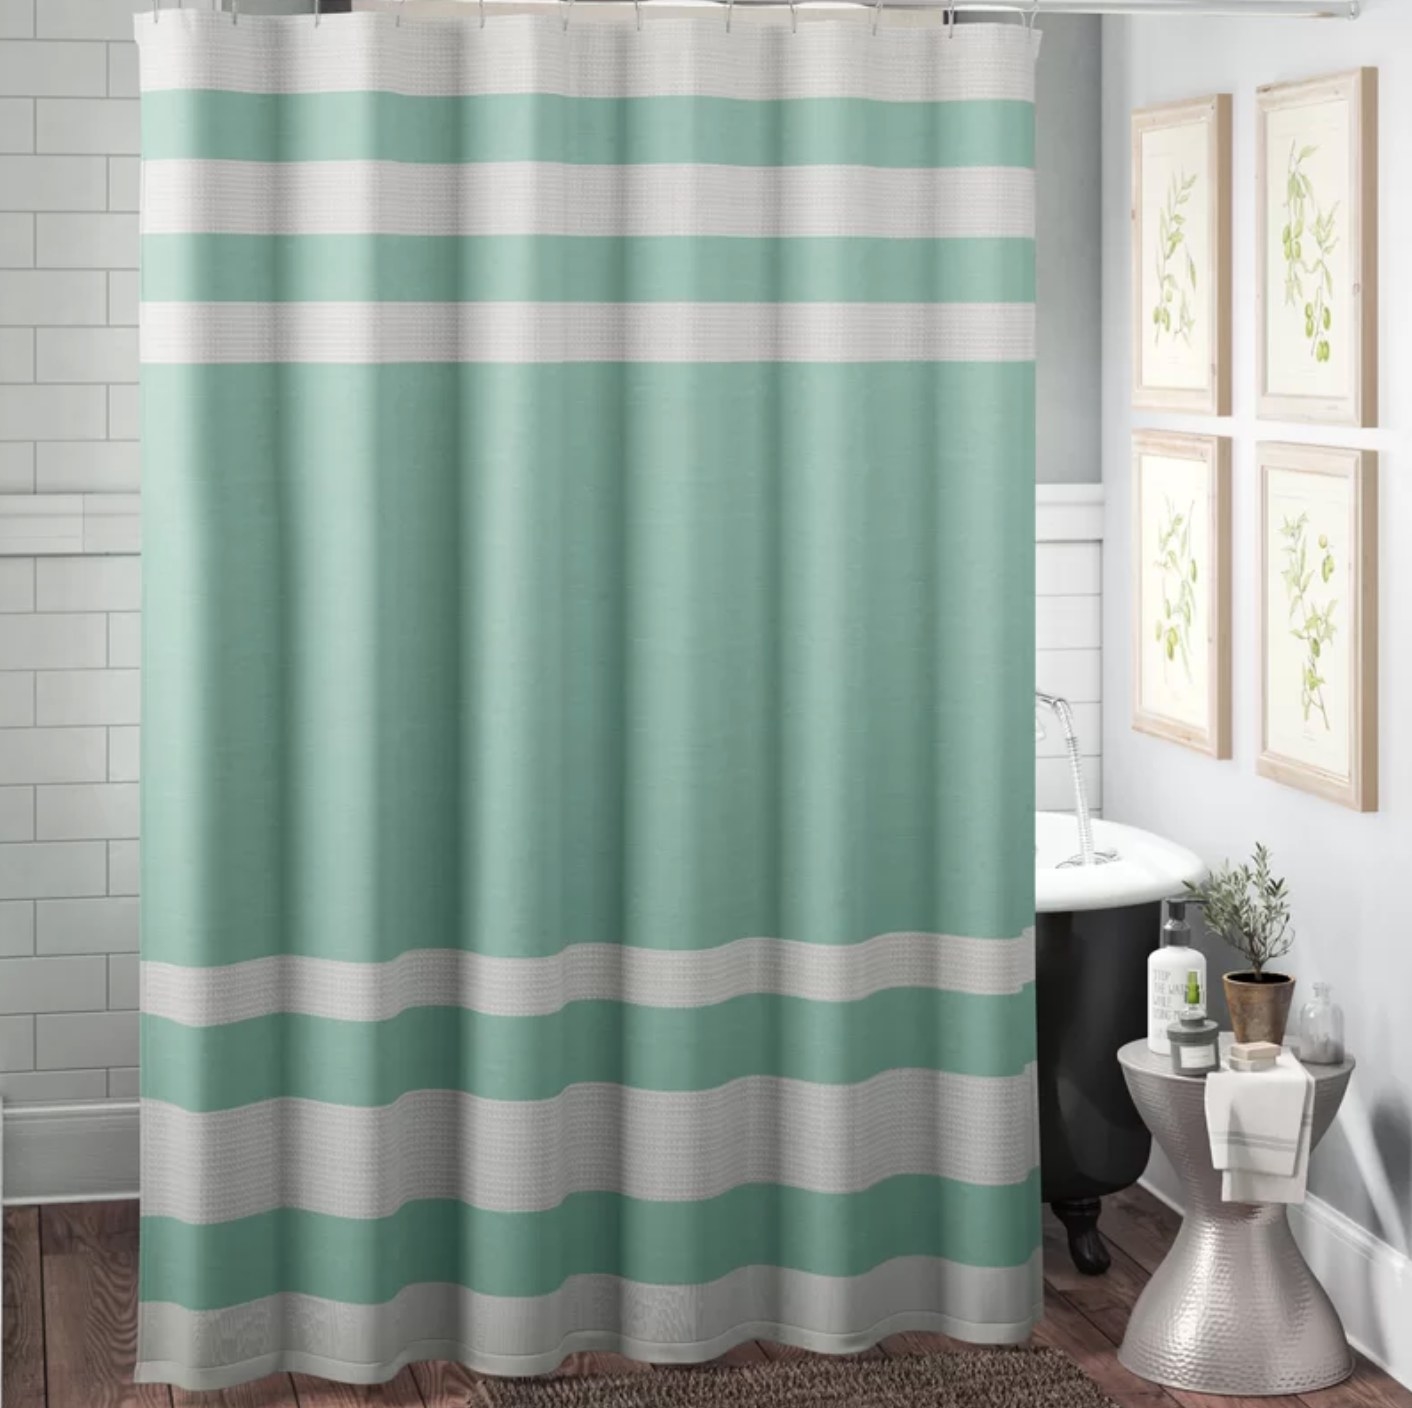 The shower curtain in aqua